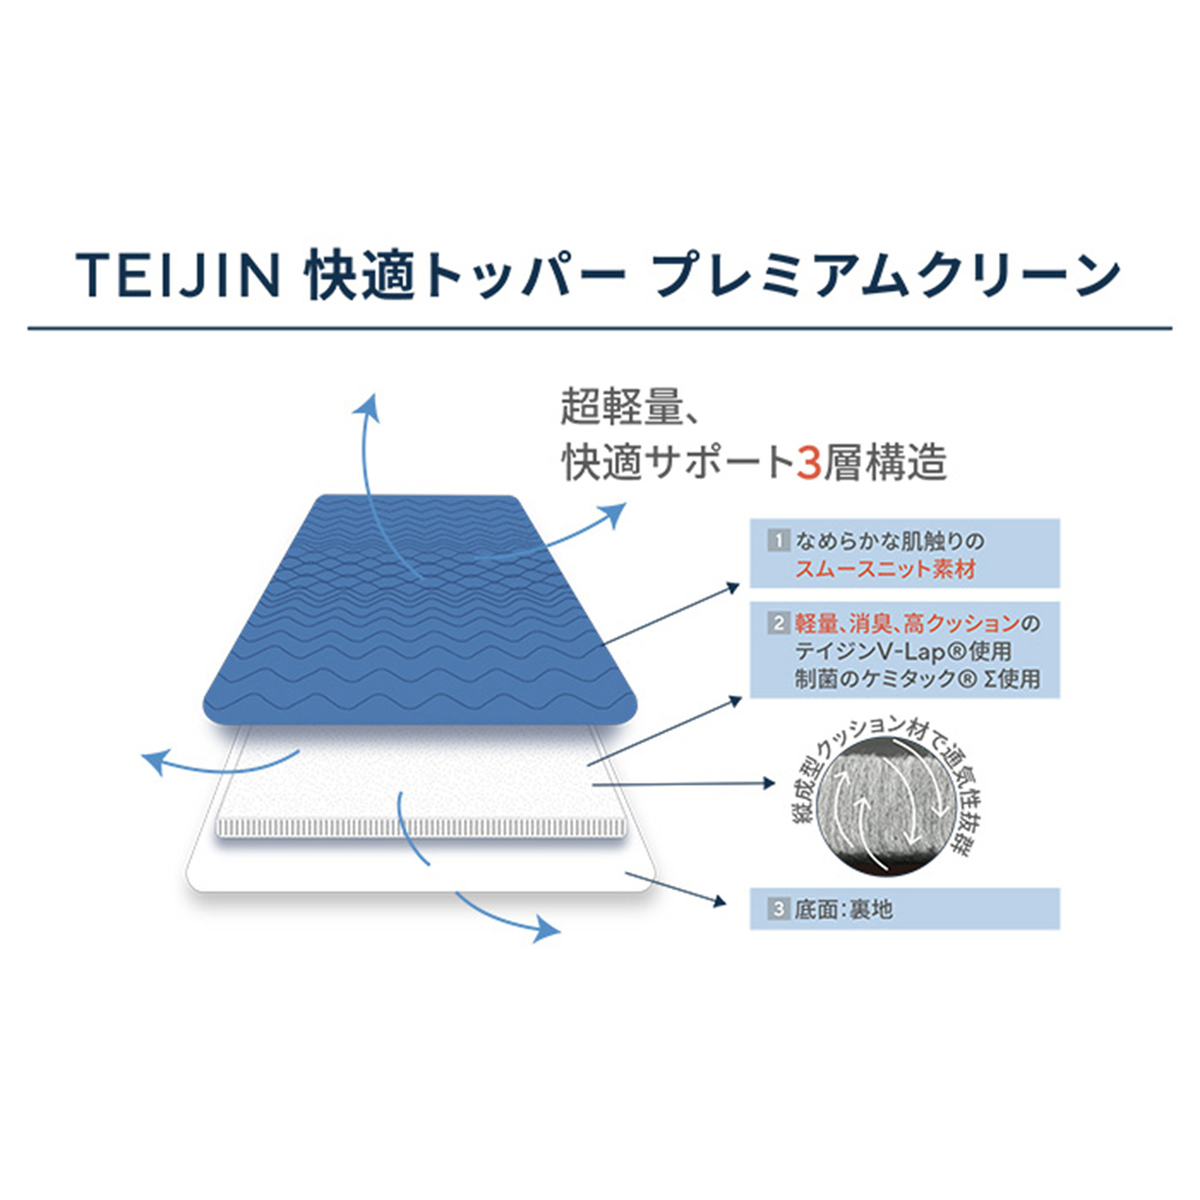 TEIJIN 快適トッパー プレミアムクリーン 帝人（TEIJIN） - QVC.jp